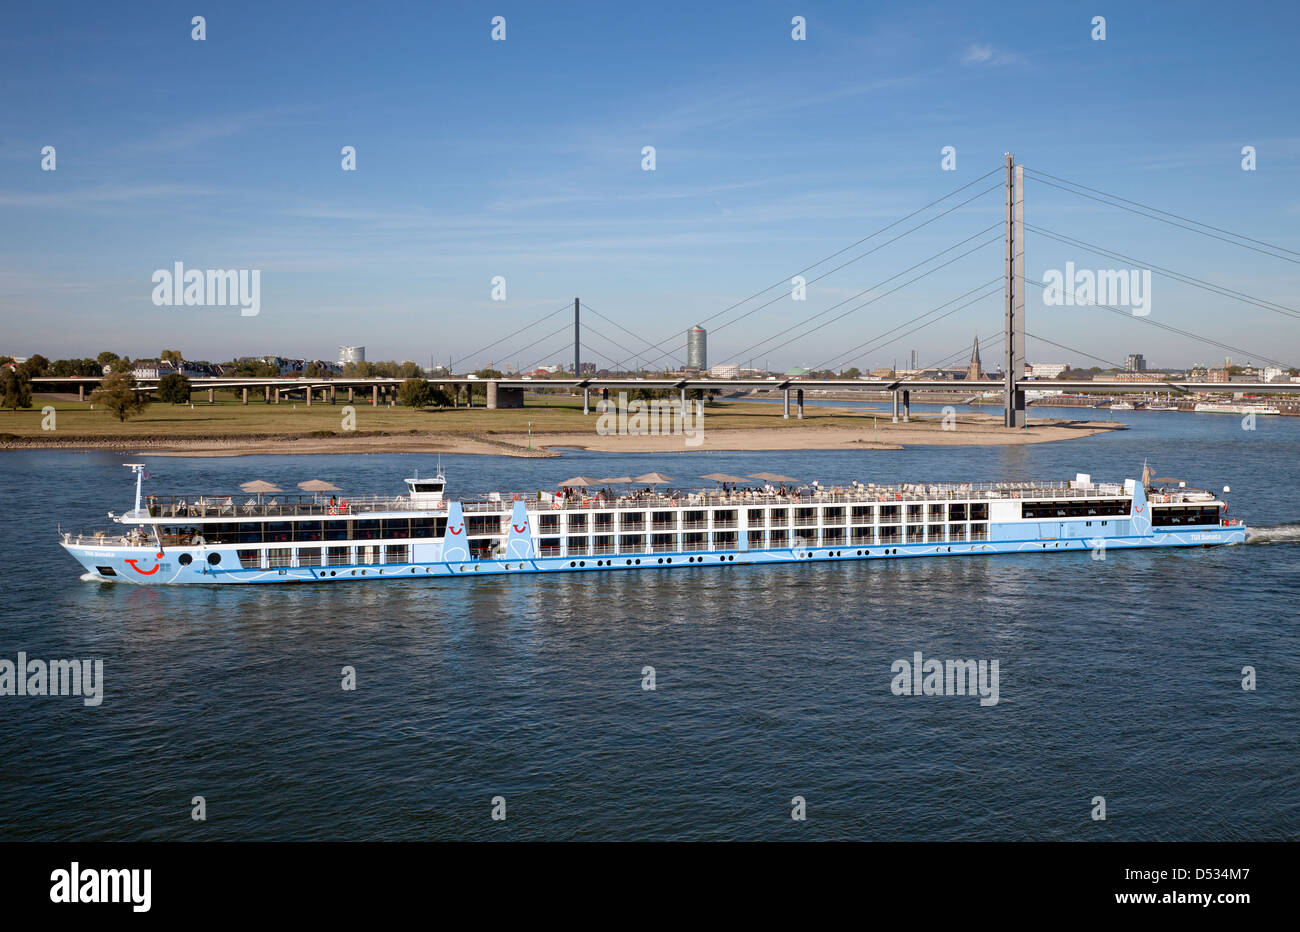 Duesseldorf, Germany, River Cruise Stock Photo